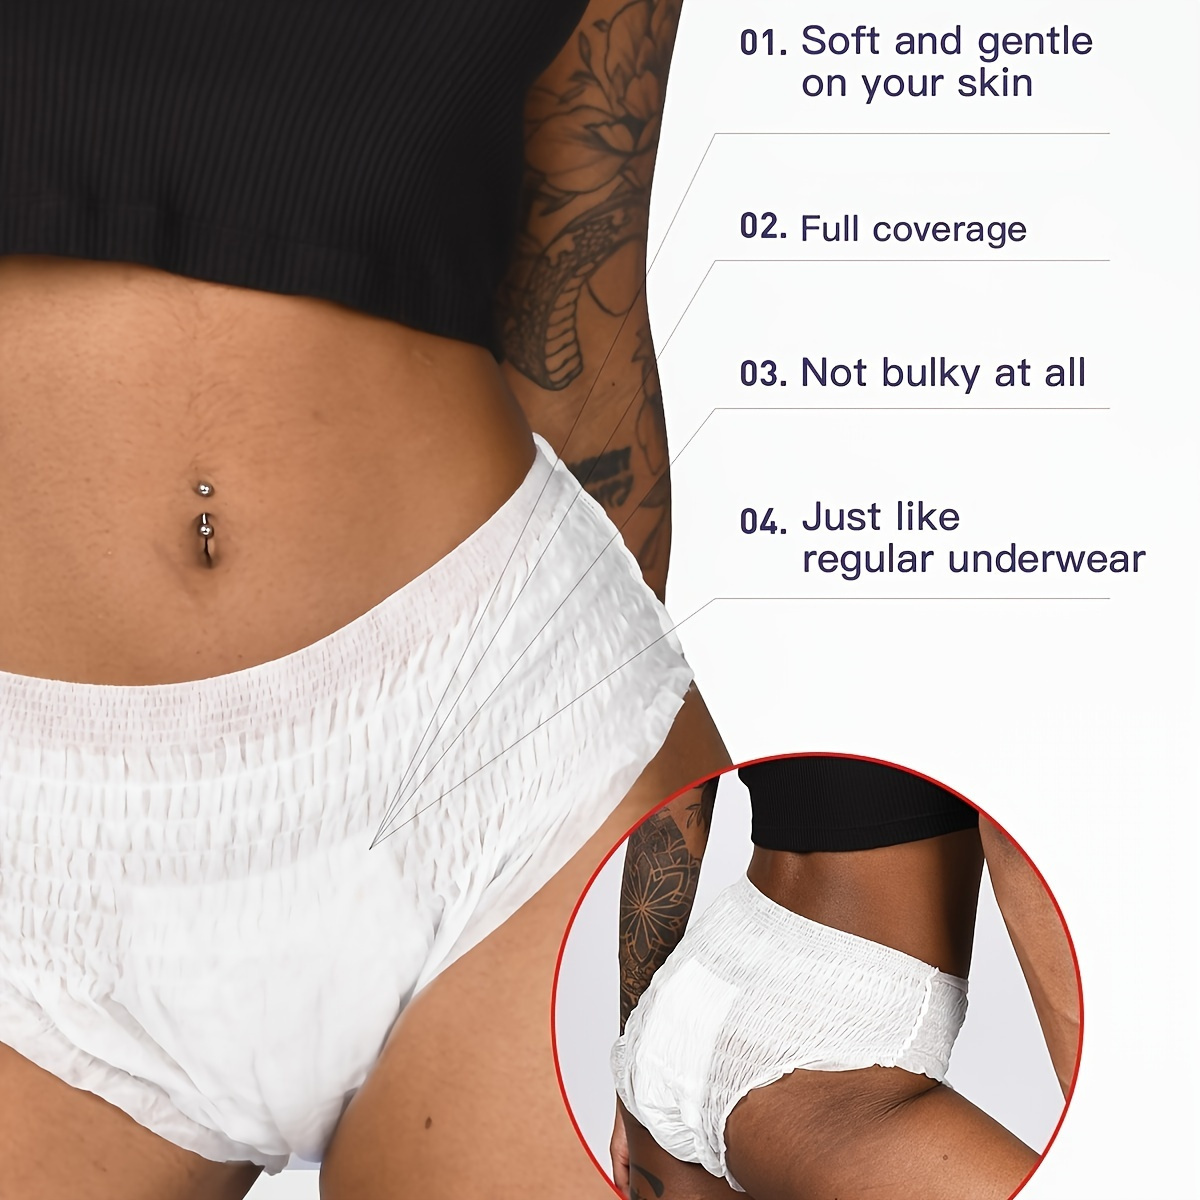 DAFI Menstrual Period & Postpartum Incontinence Underwear for